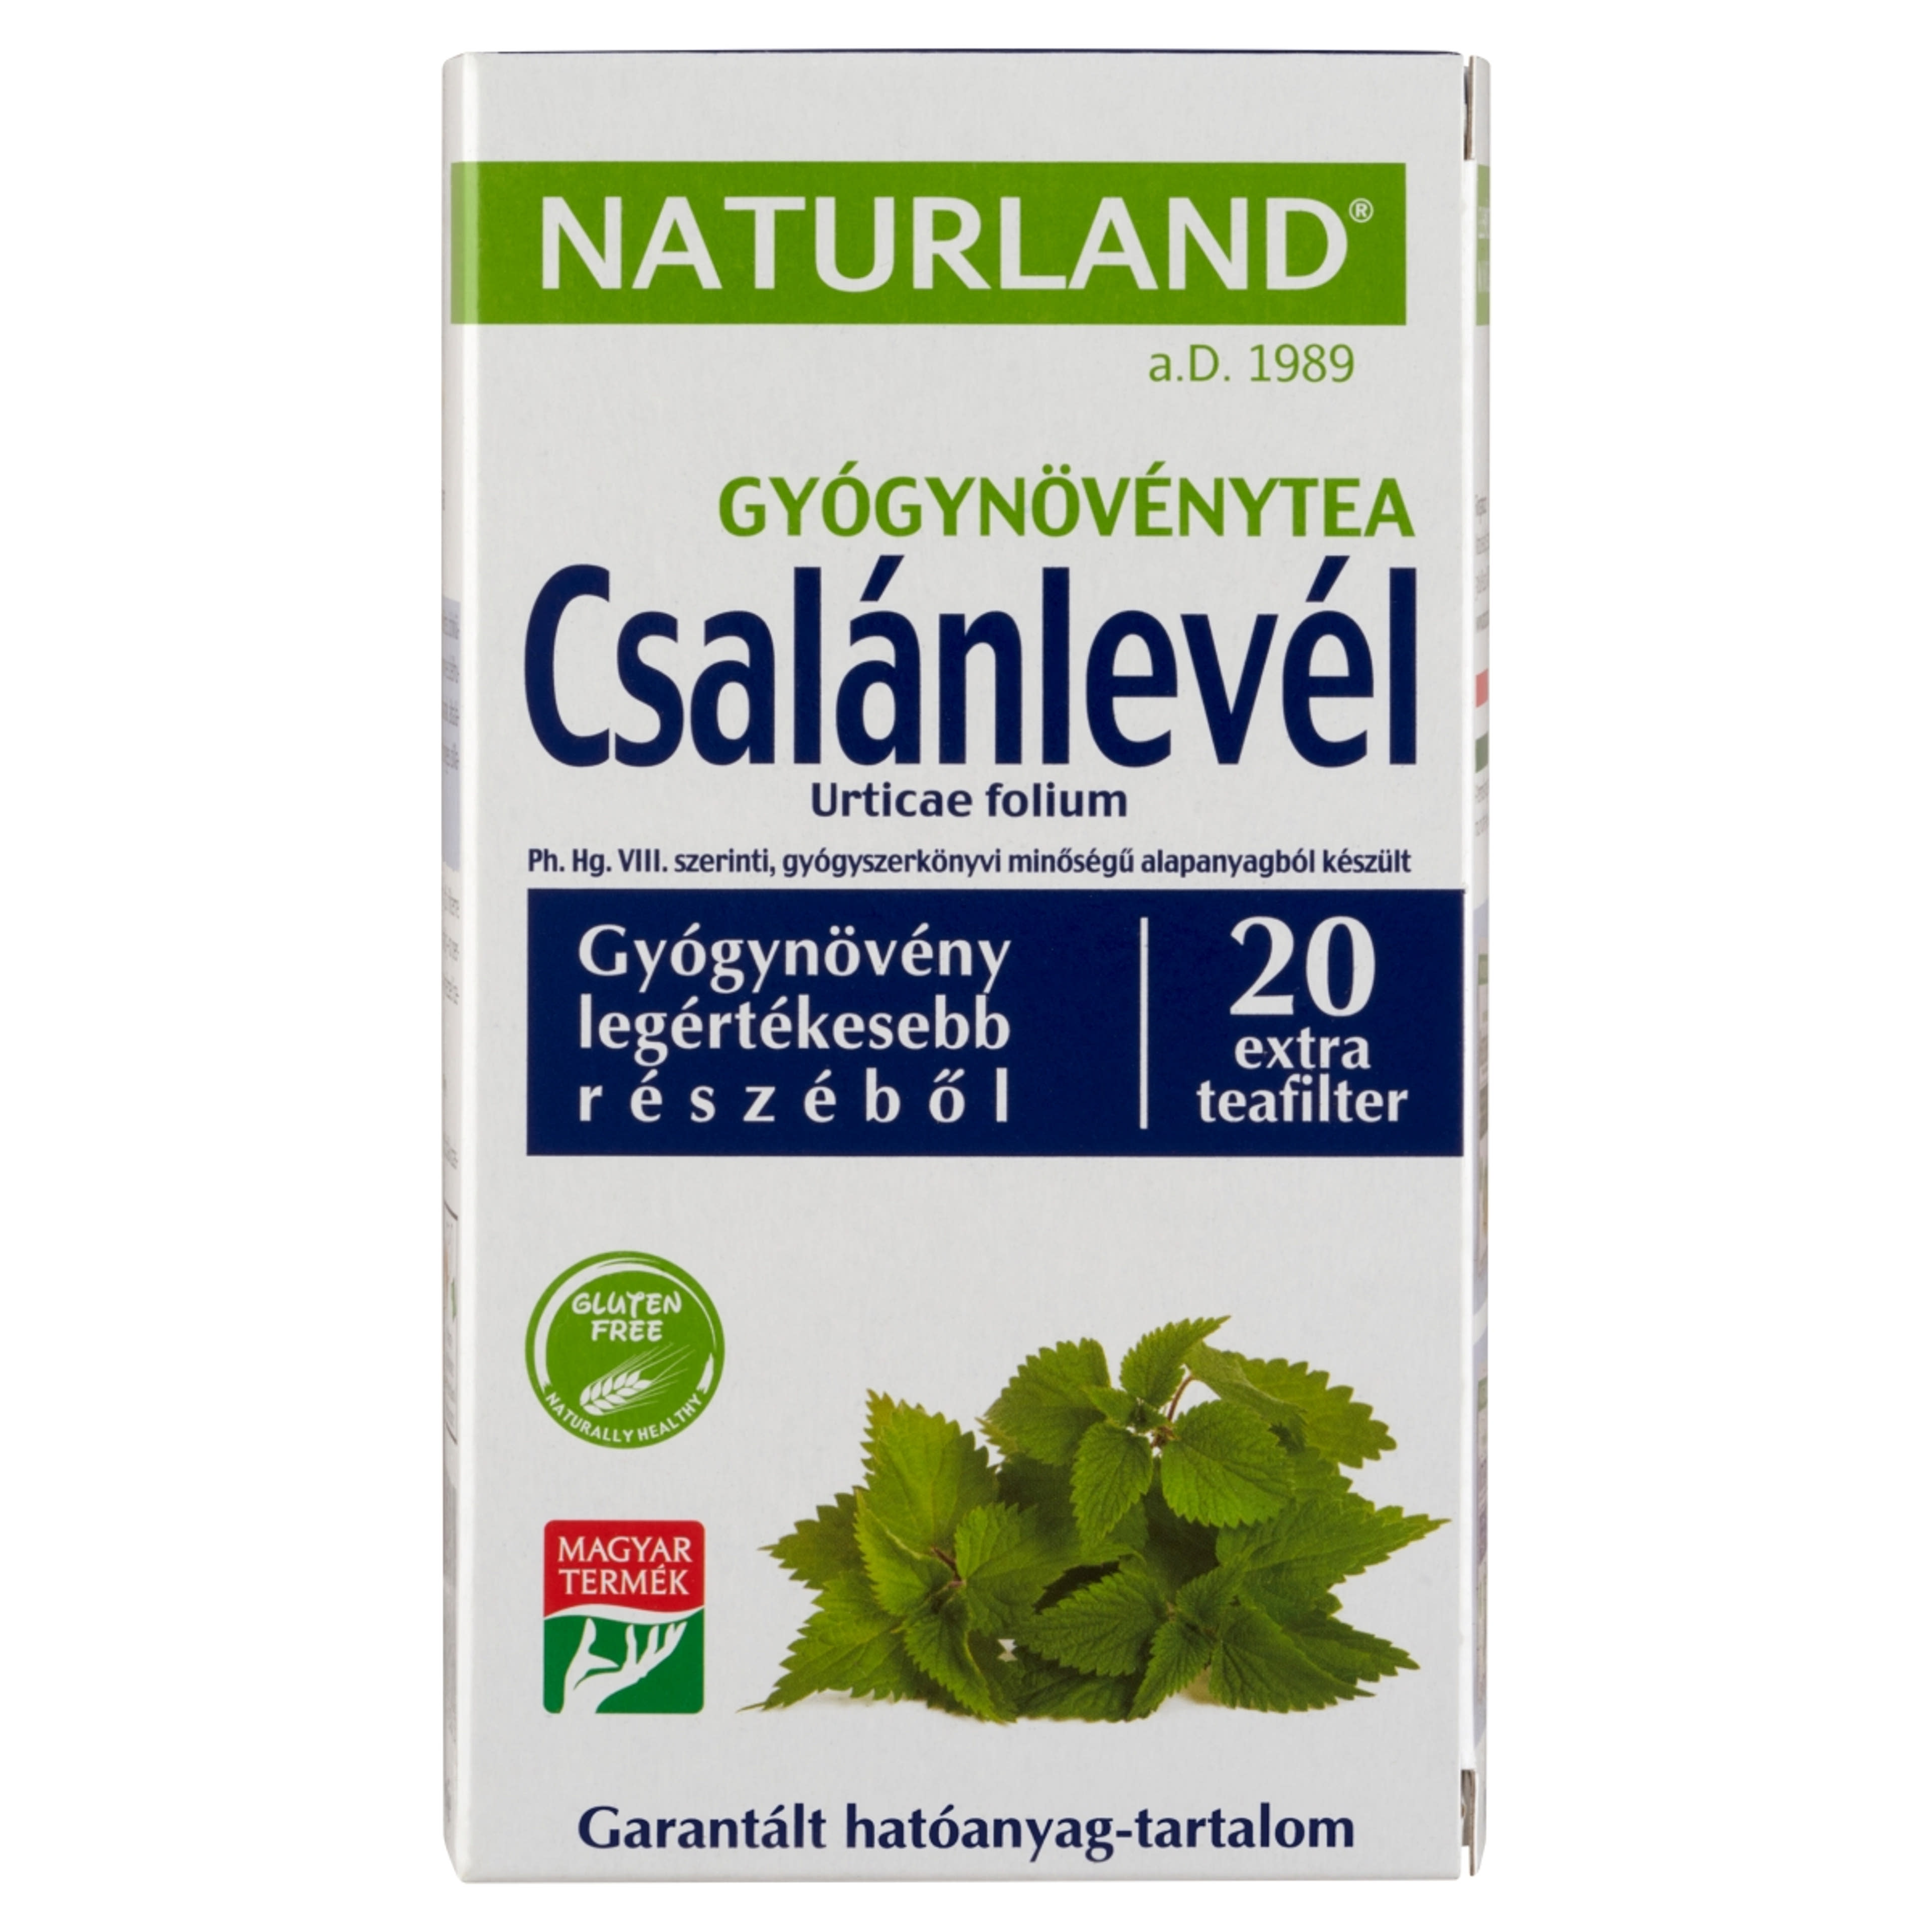 Naturland Herbal csalánlevél tea - 20 filter - 30 g-1